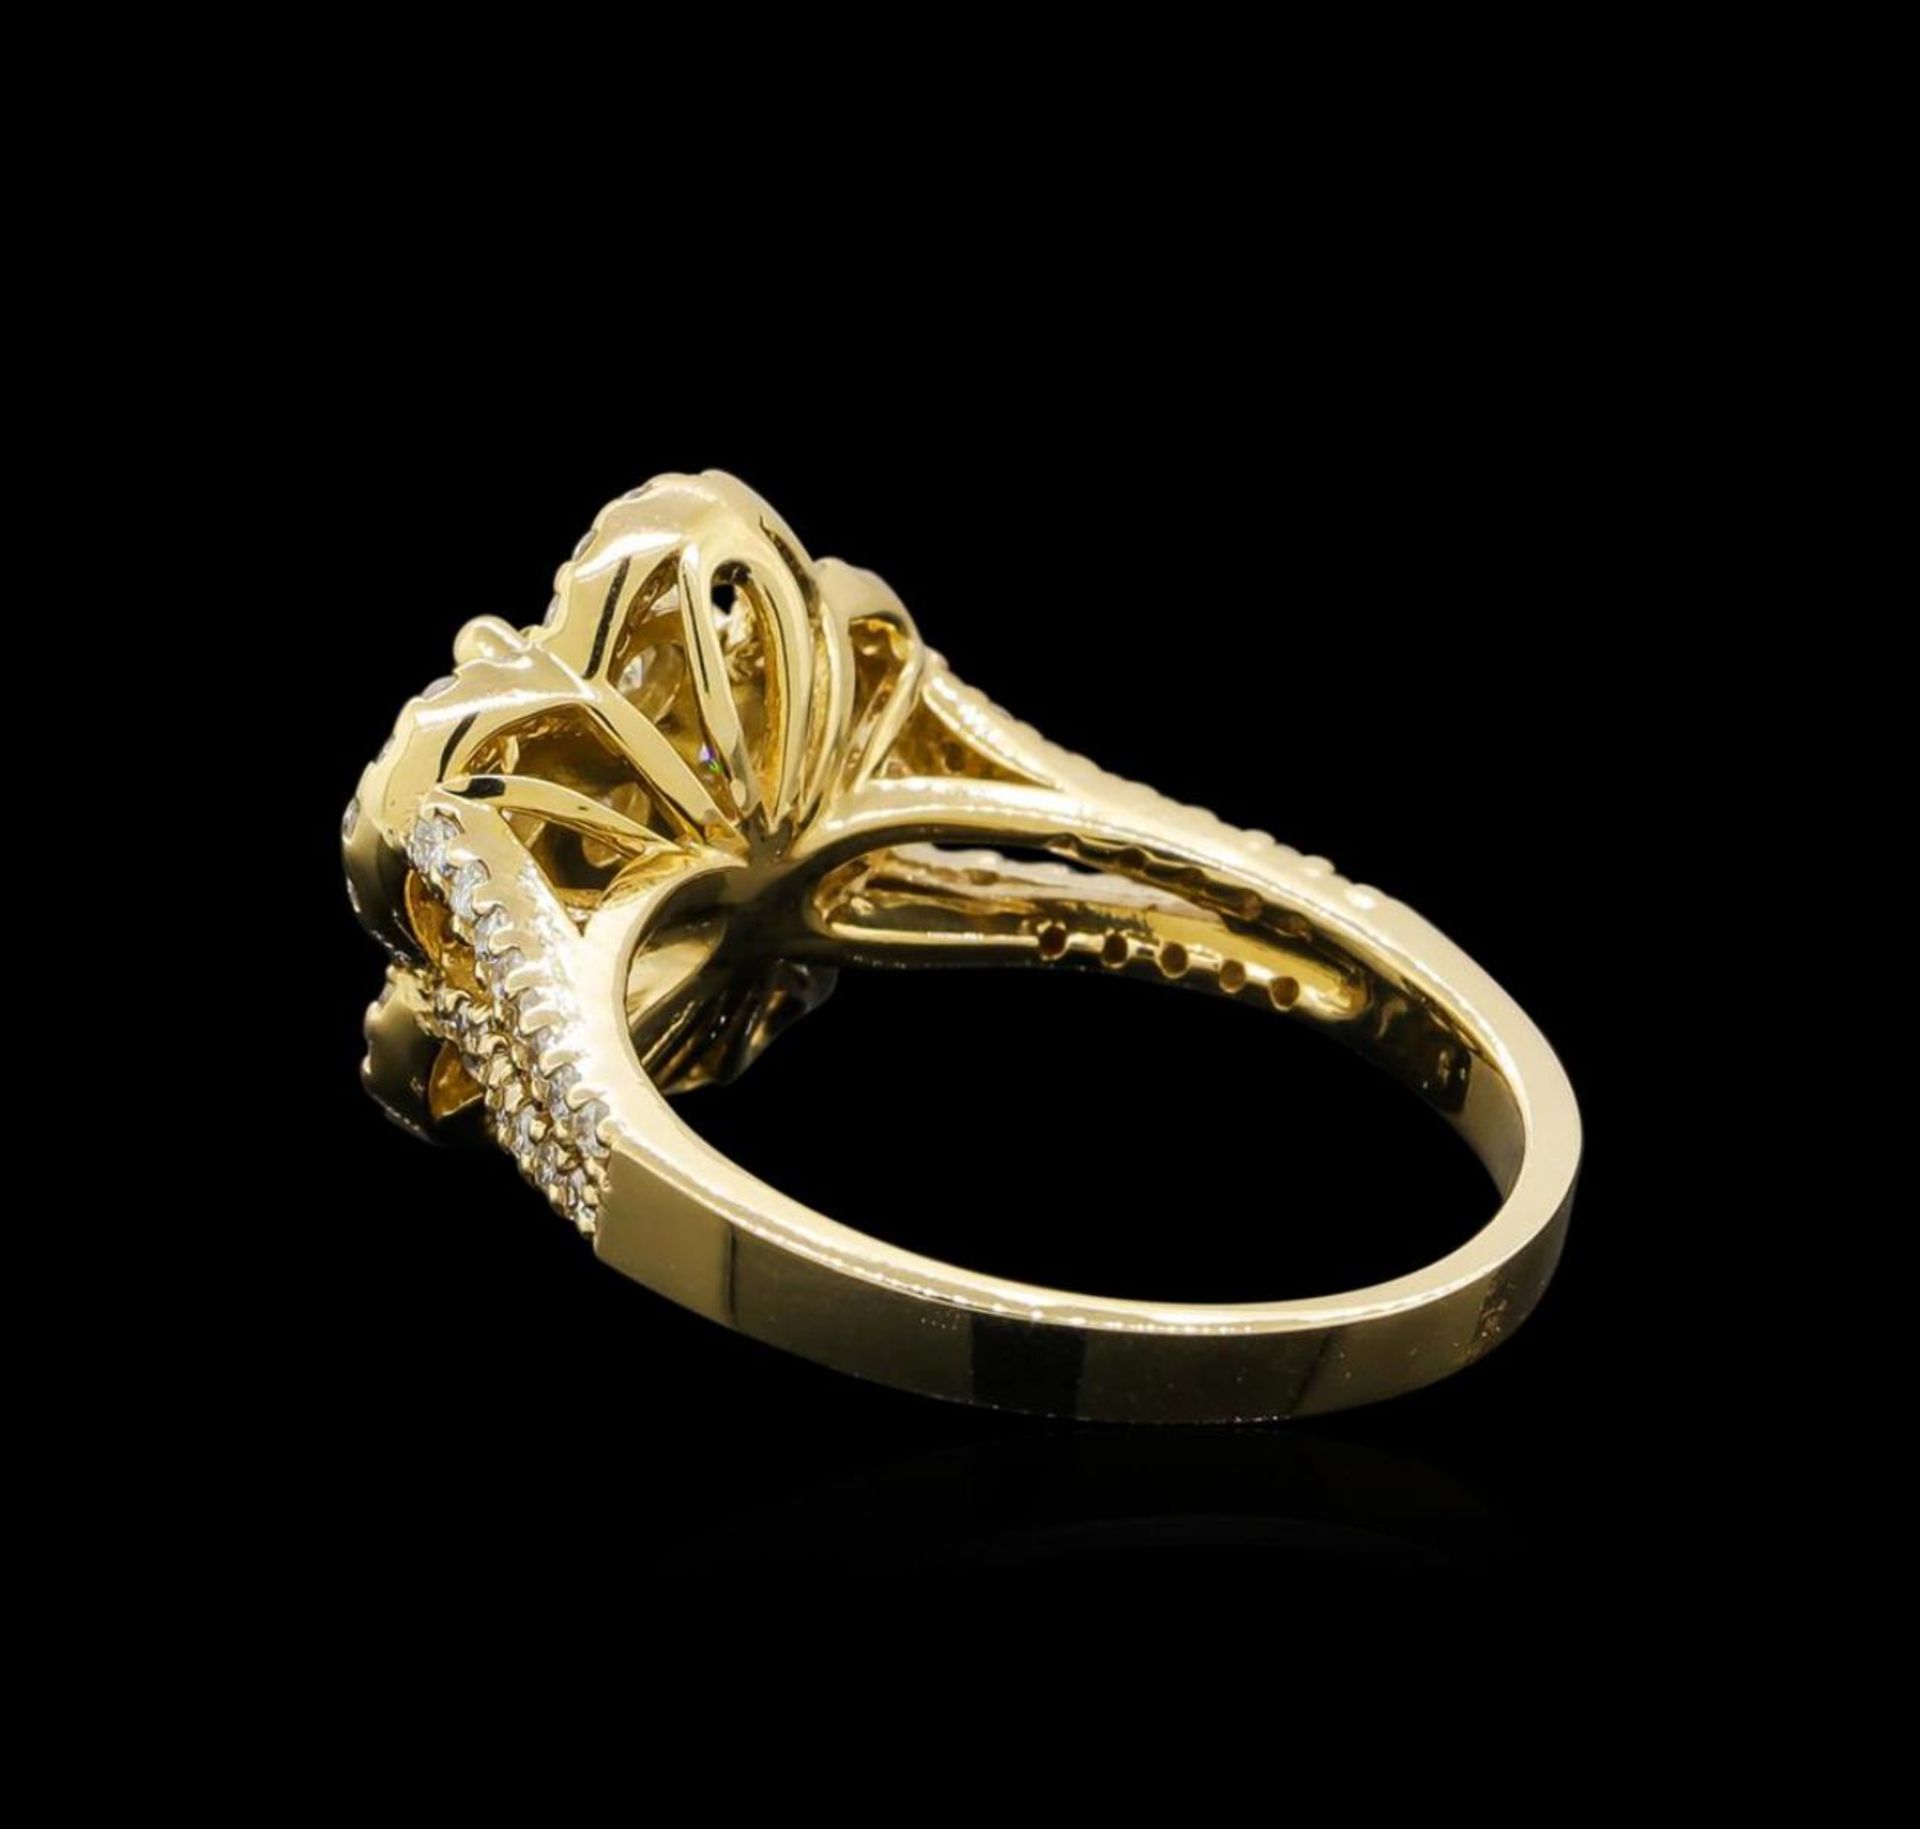 14KT Yellow Gold 1.14 ctw Diamond Ring - Image 3 of 5